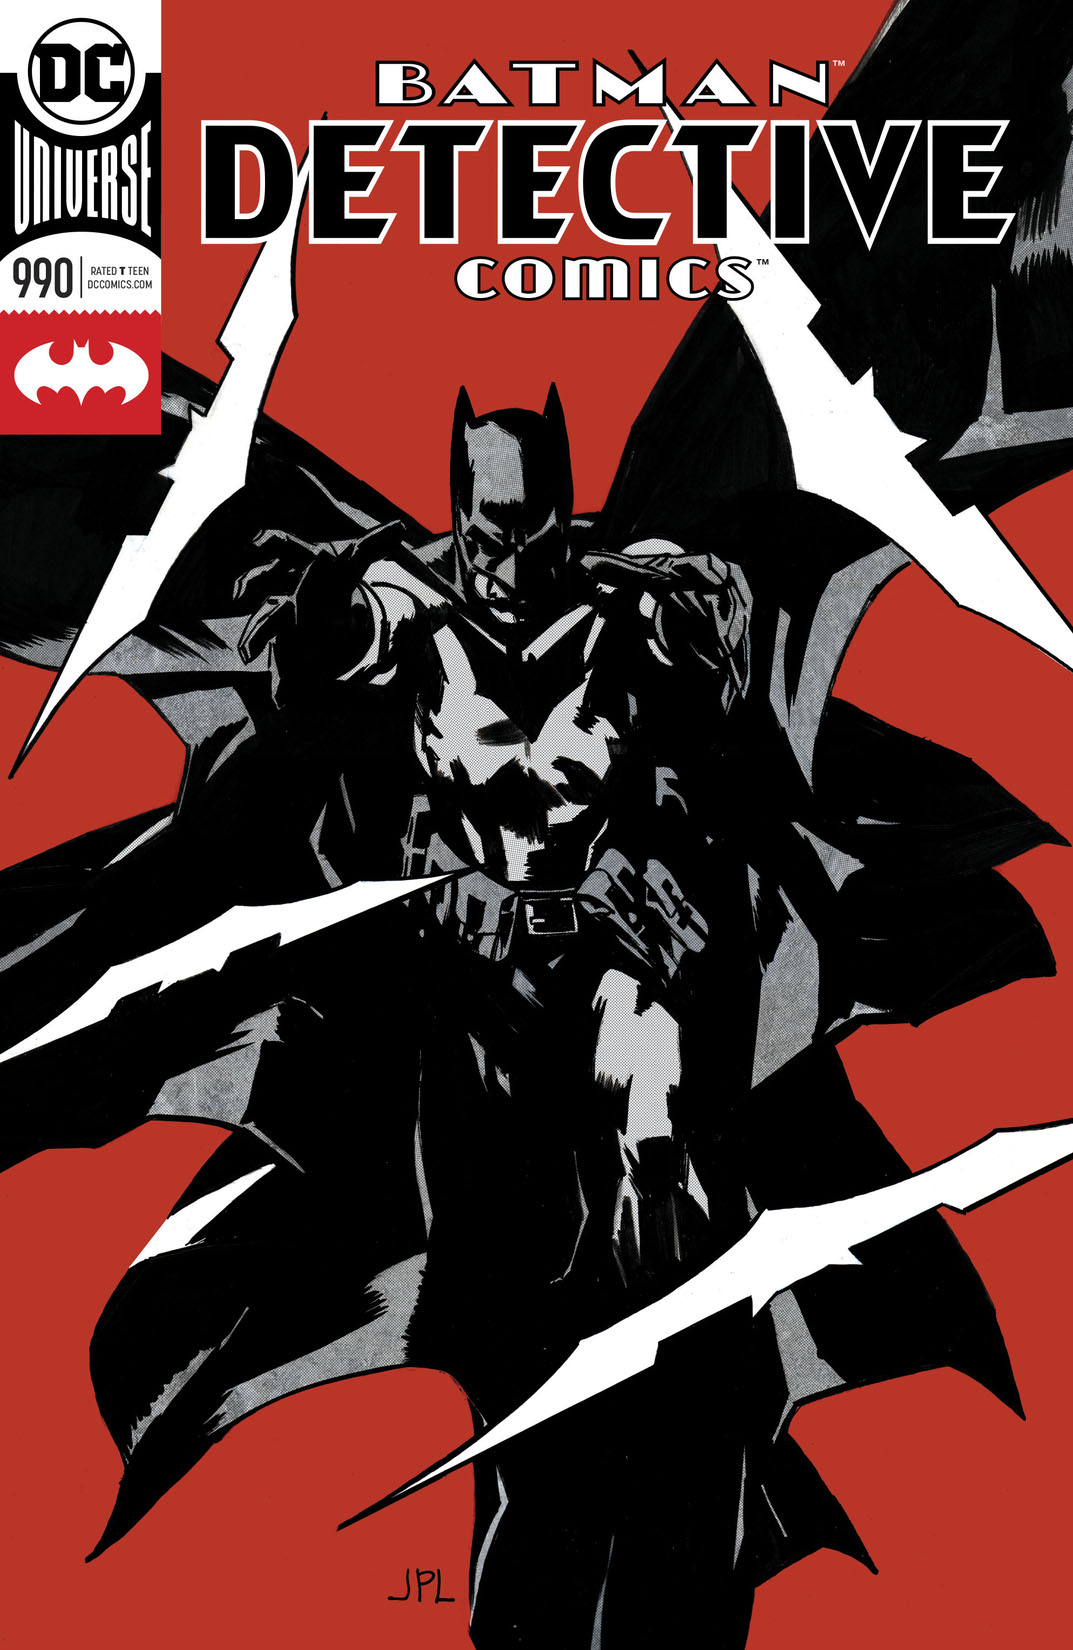 Detective Comics (2016-) #990 preview images